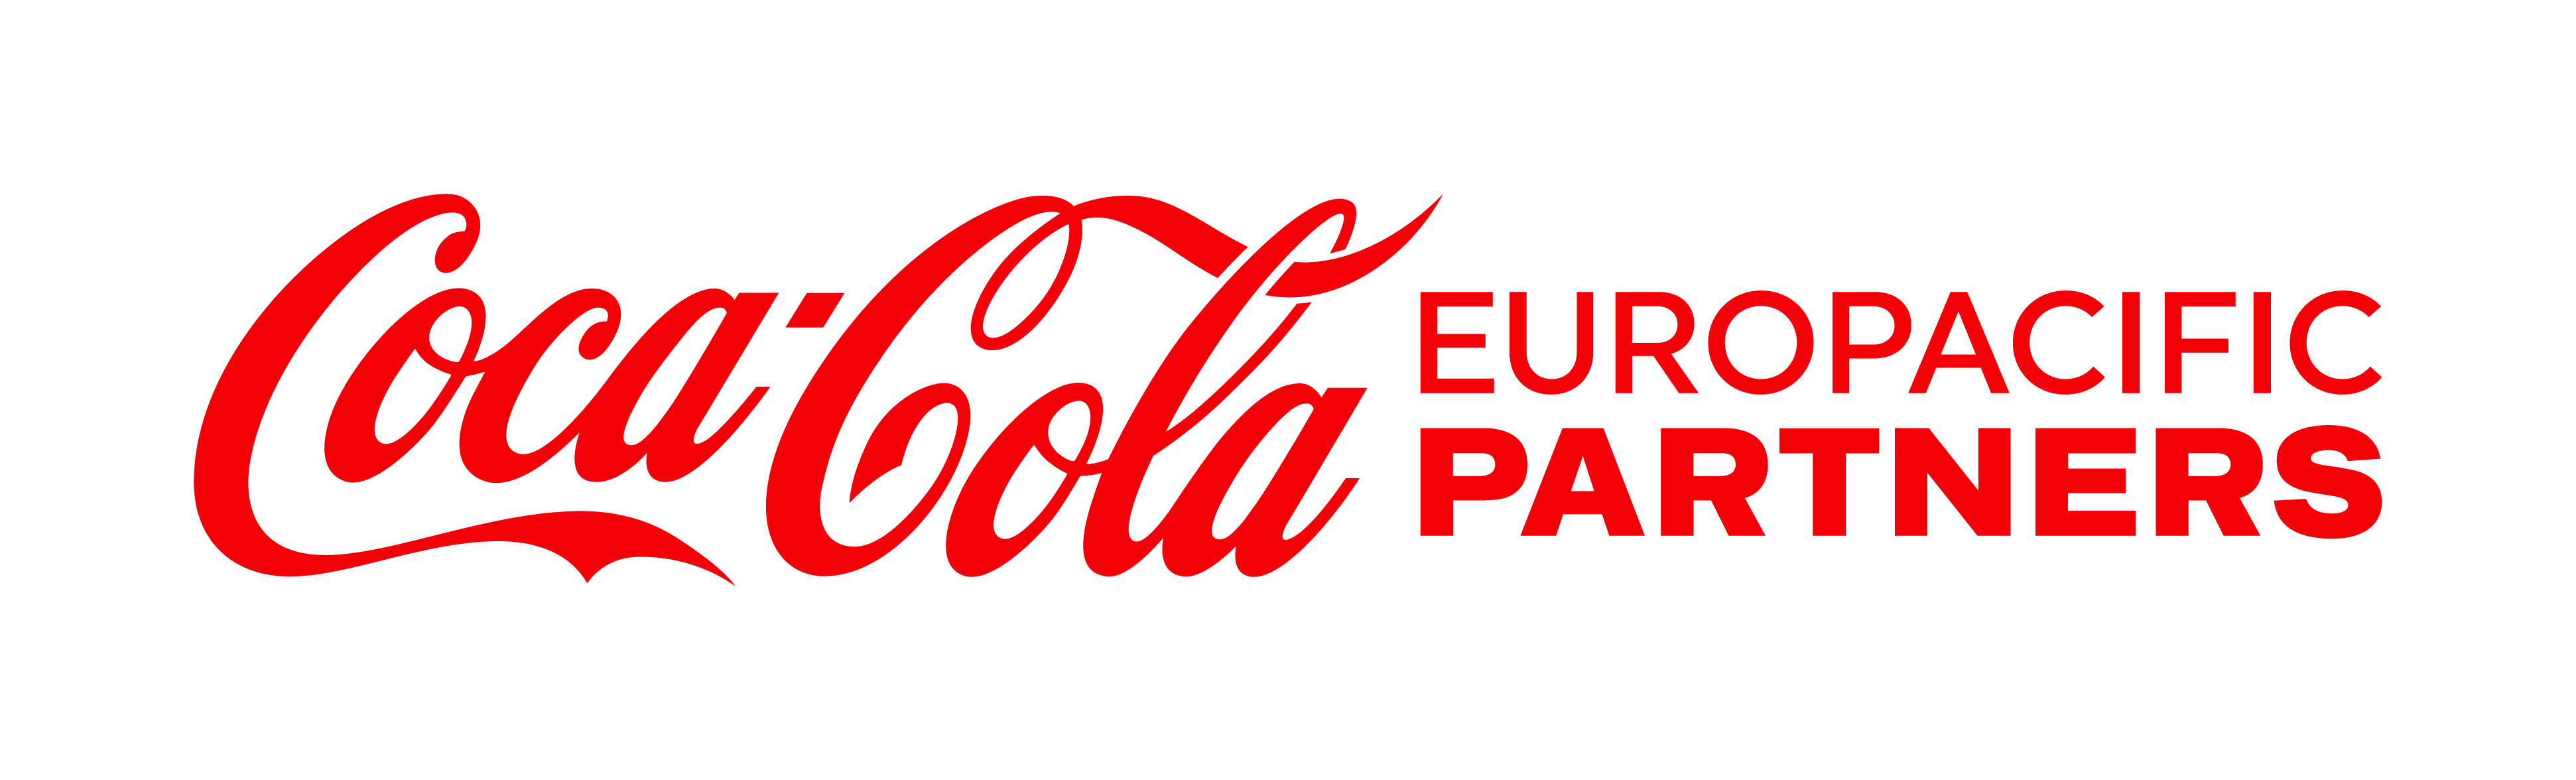 coca cola europacific partners logo